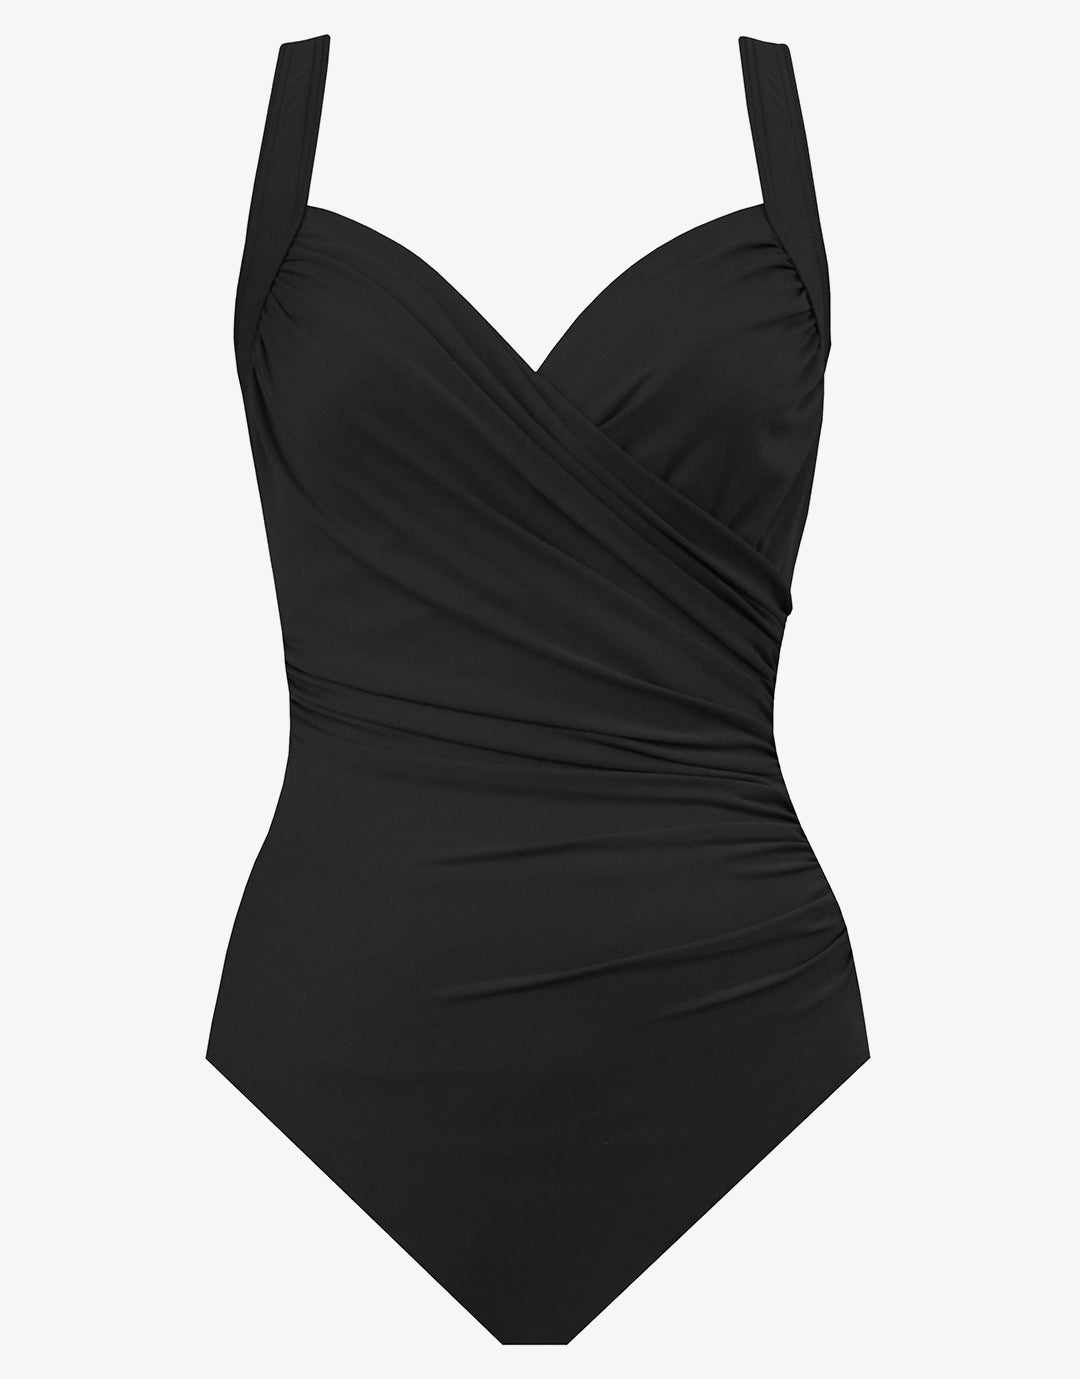 Must Haves Sanibel Swimsuit - Black - Simply Beach UK